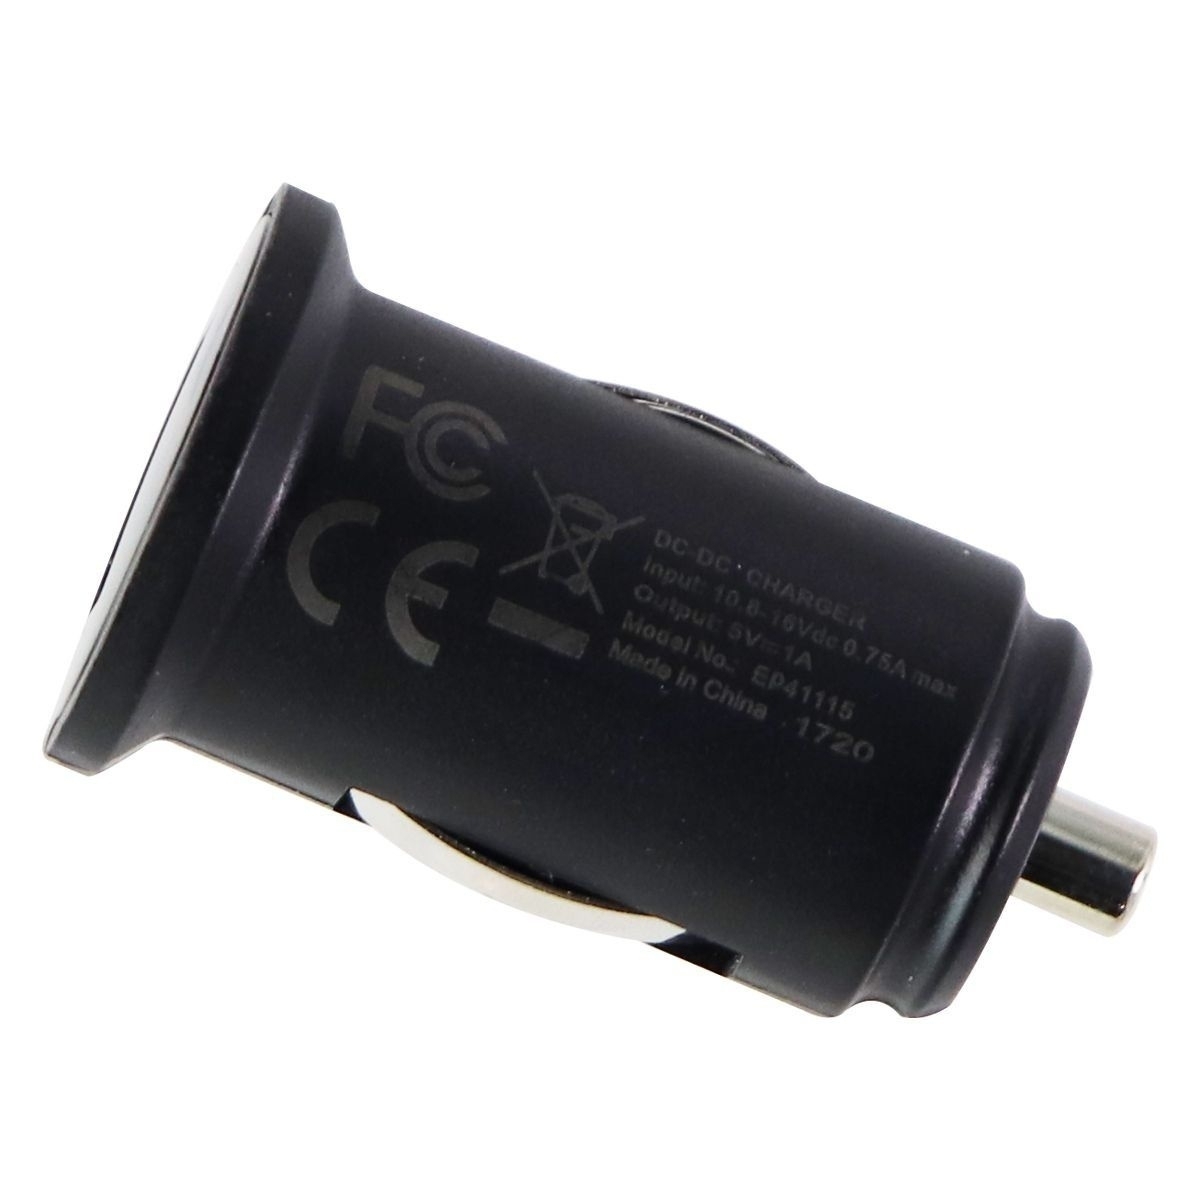 Unbranded (EP41115) 5V 1A Car Charging Adapter - Black